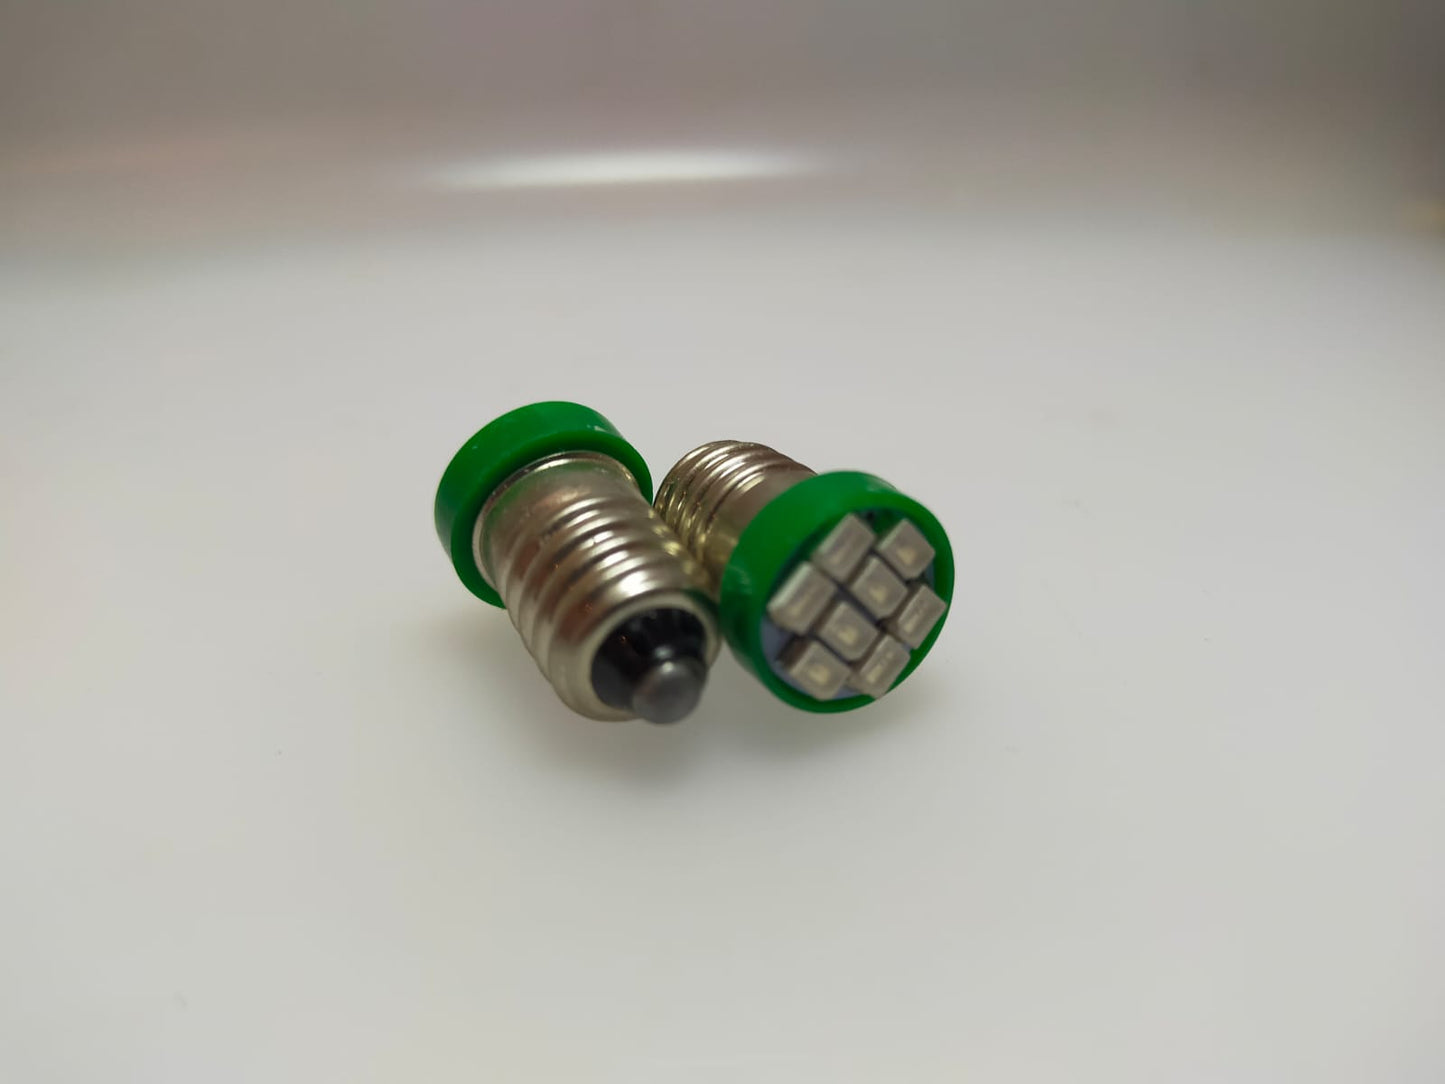 E10 Screw Fit LED / Filament Bulbs